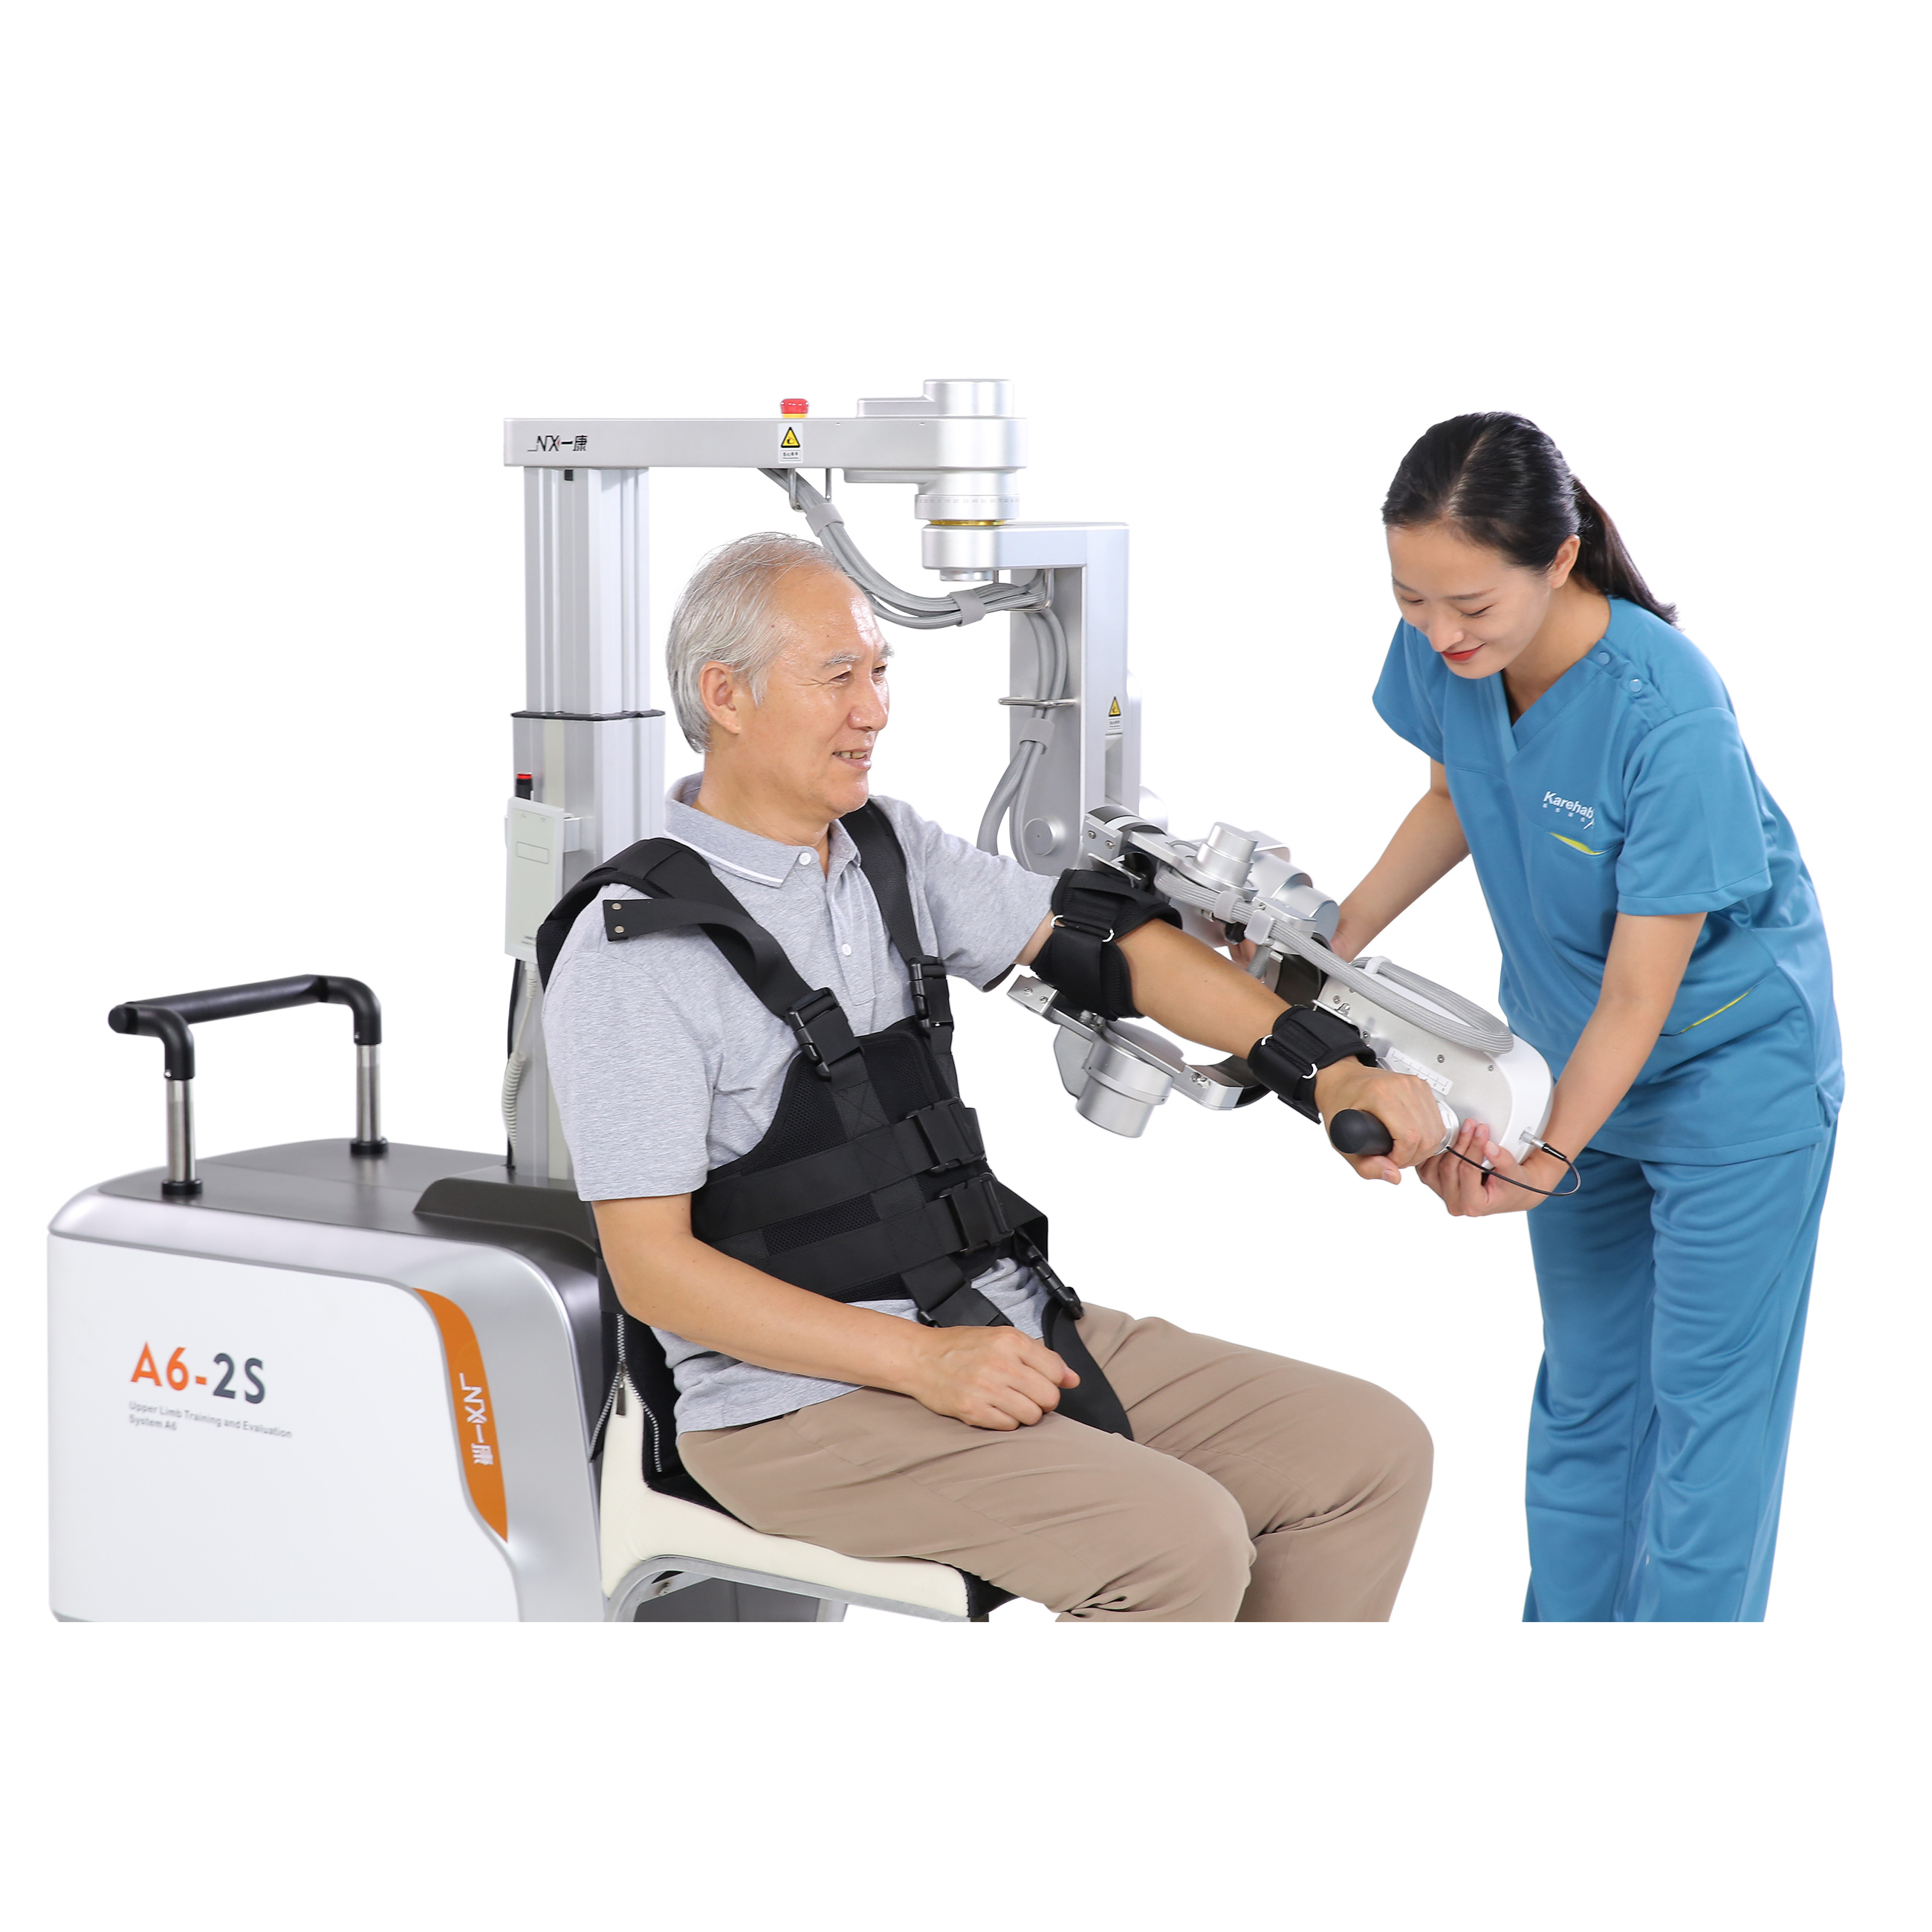 Arm Rehabilitation and Assessment Robotics A6 Featured Image